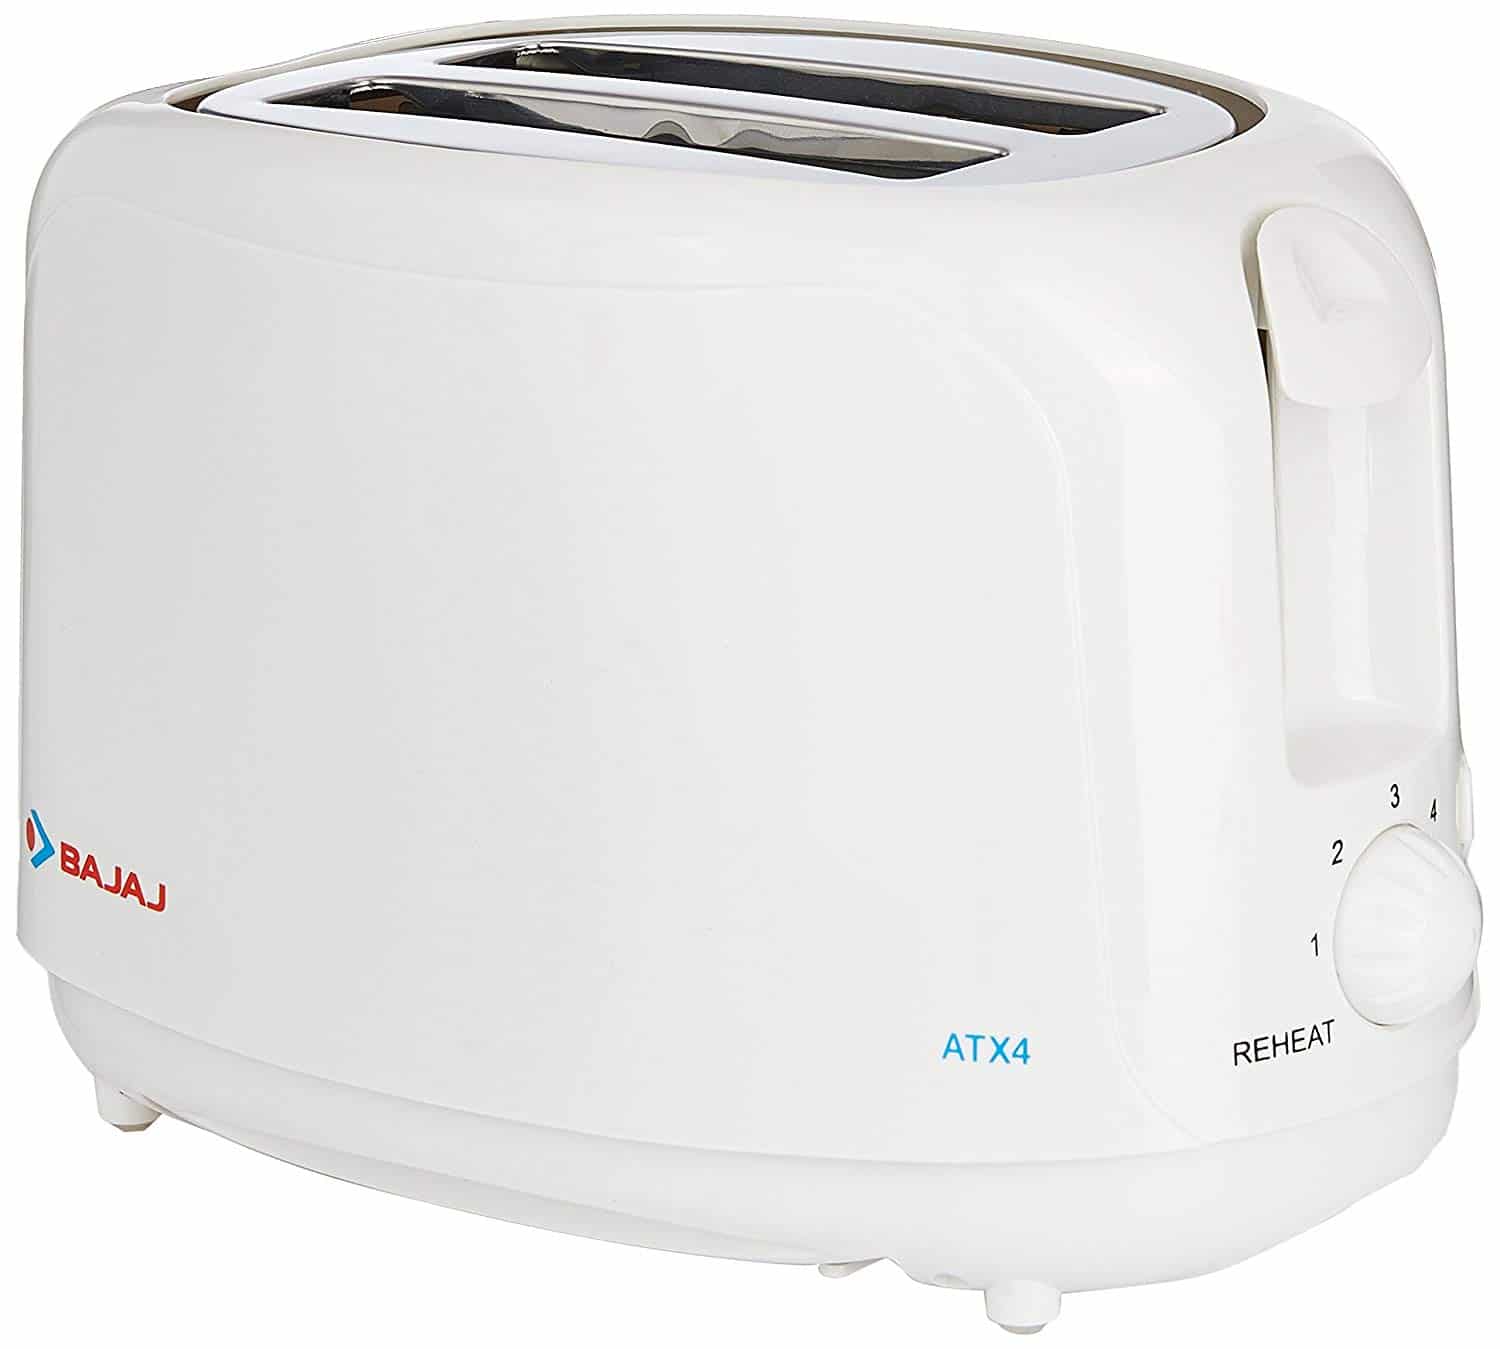 Bajaj ATX 4 Pop-up Toaster